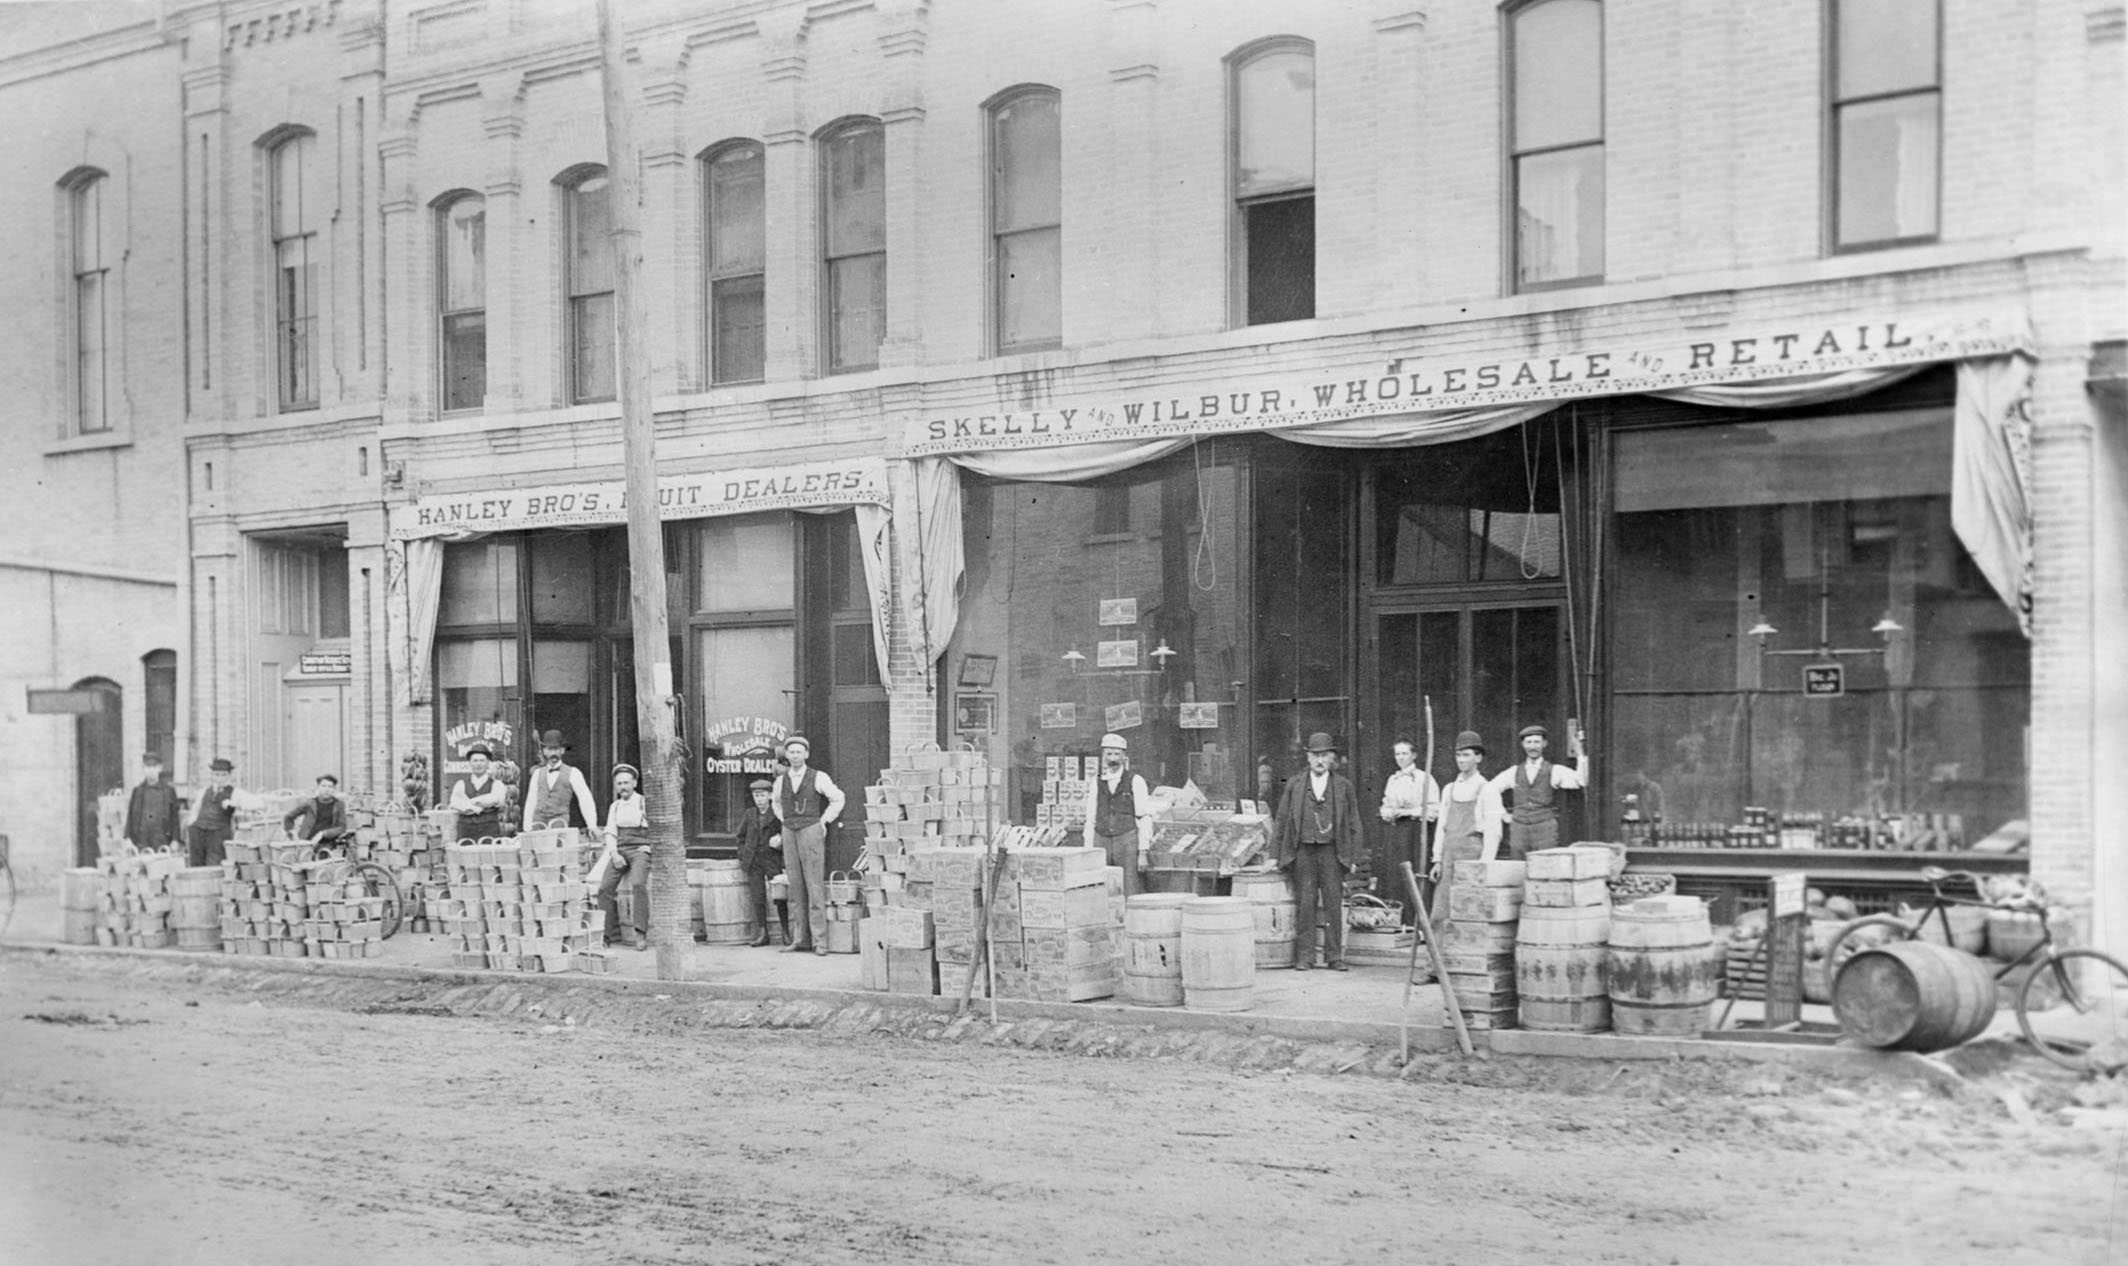 Jackson Street merchants with their wares, 1890